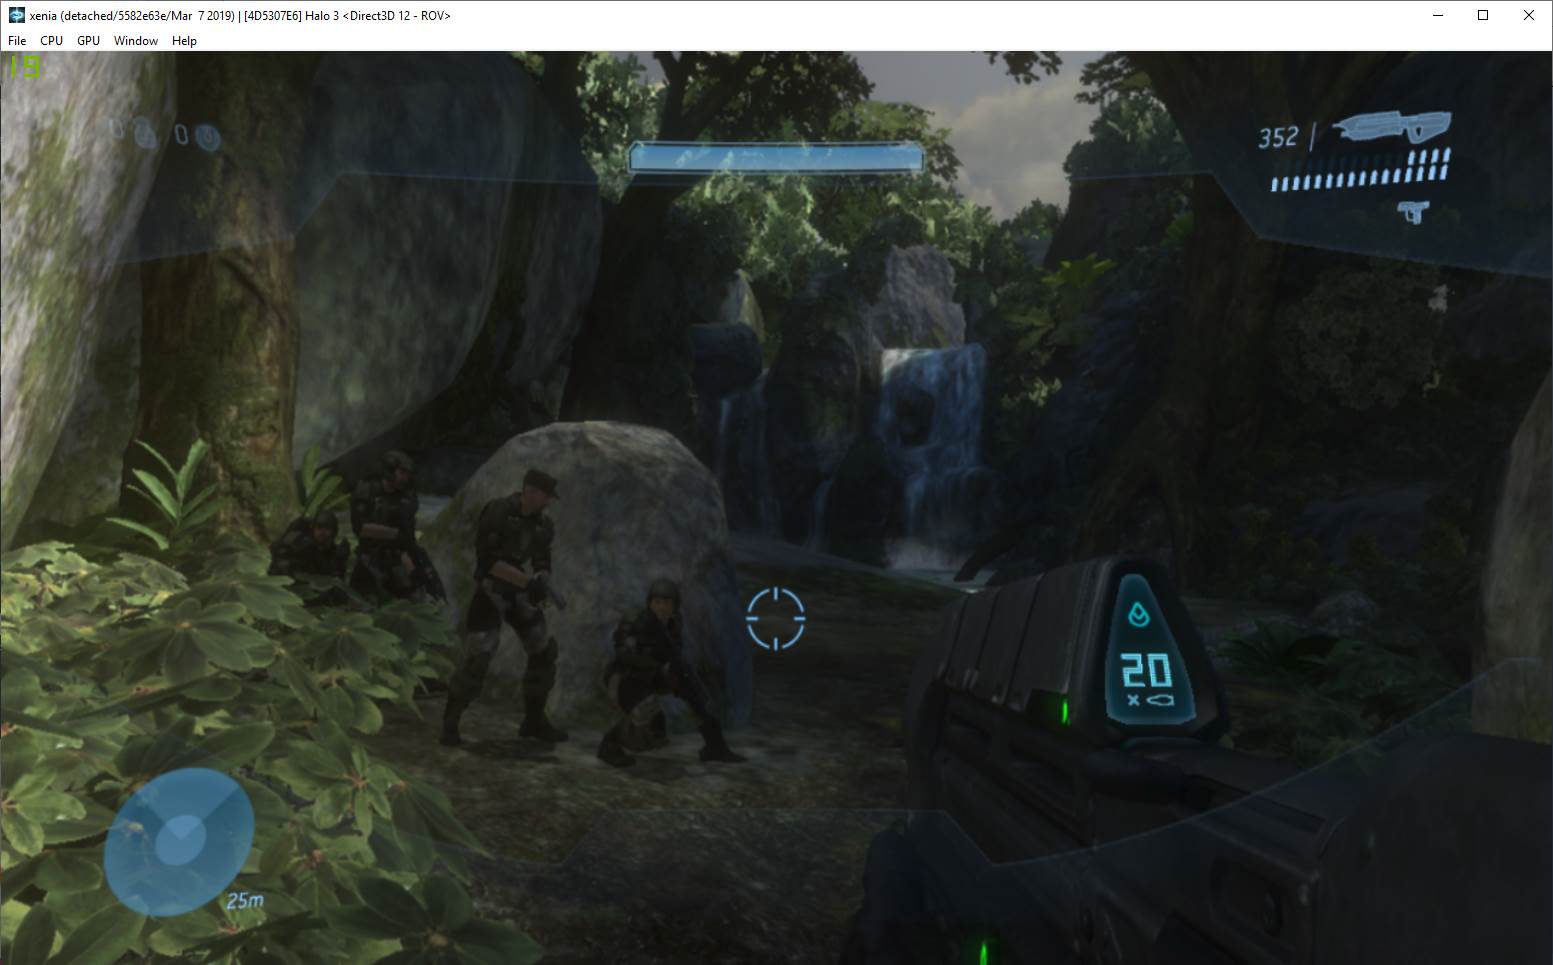 Oh boy. Looks like Xenia (Xbox 360 Emulator) is adding Anti-Piracy